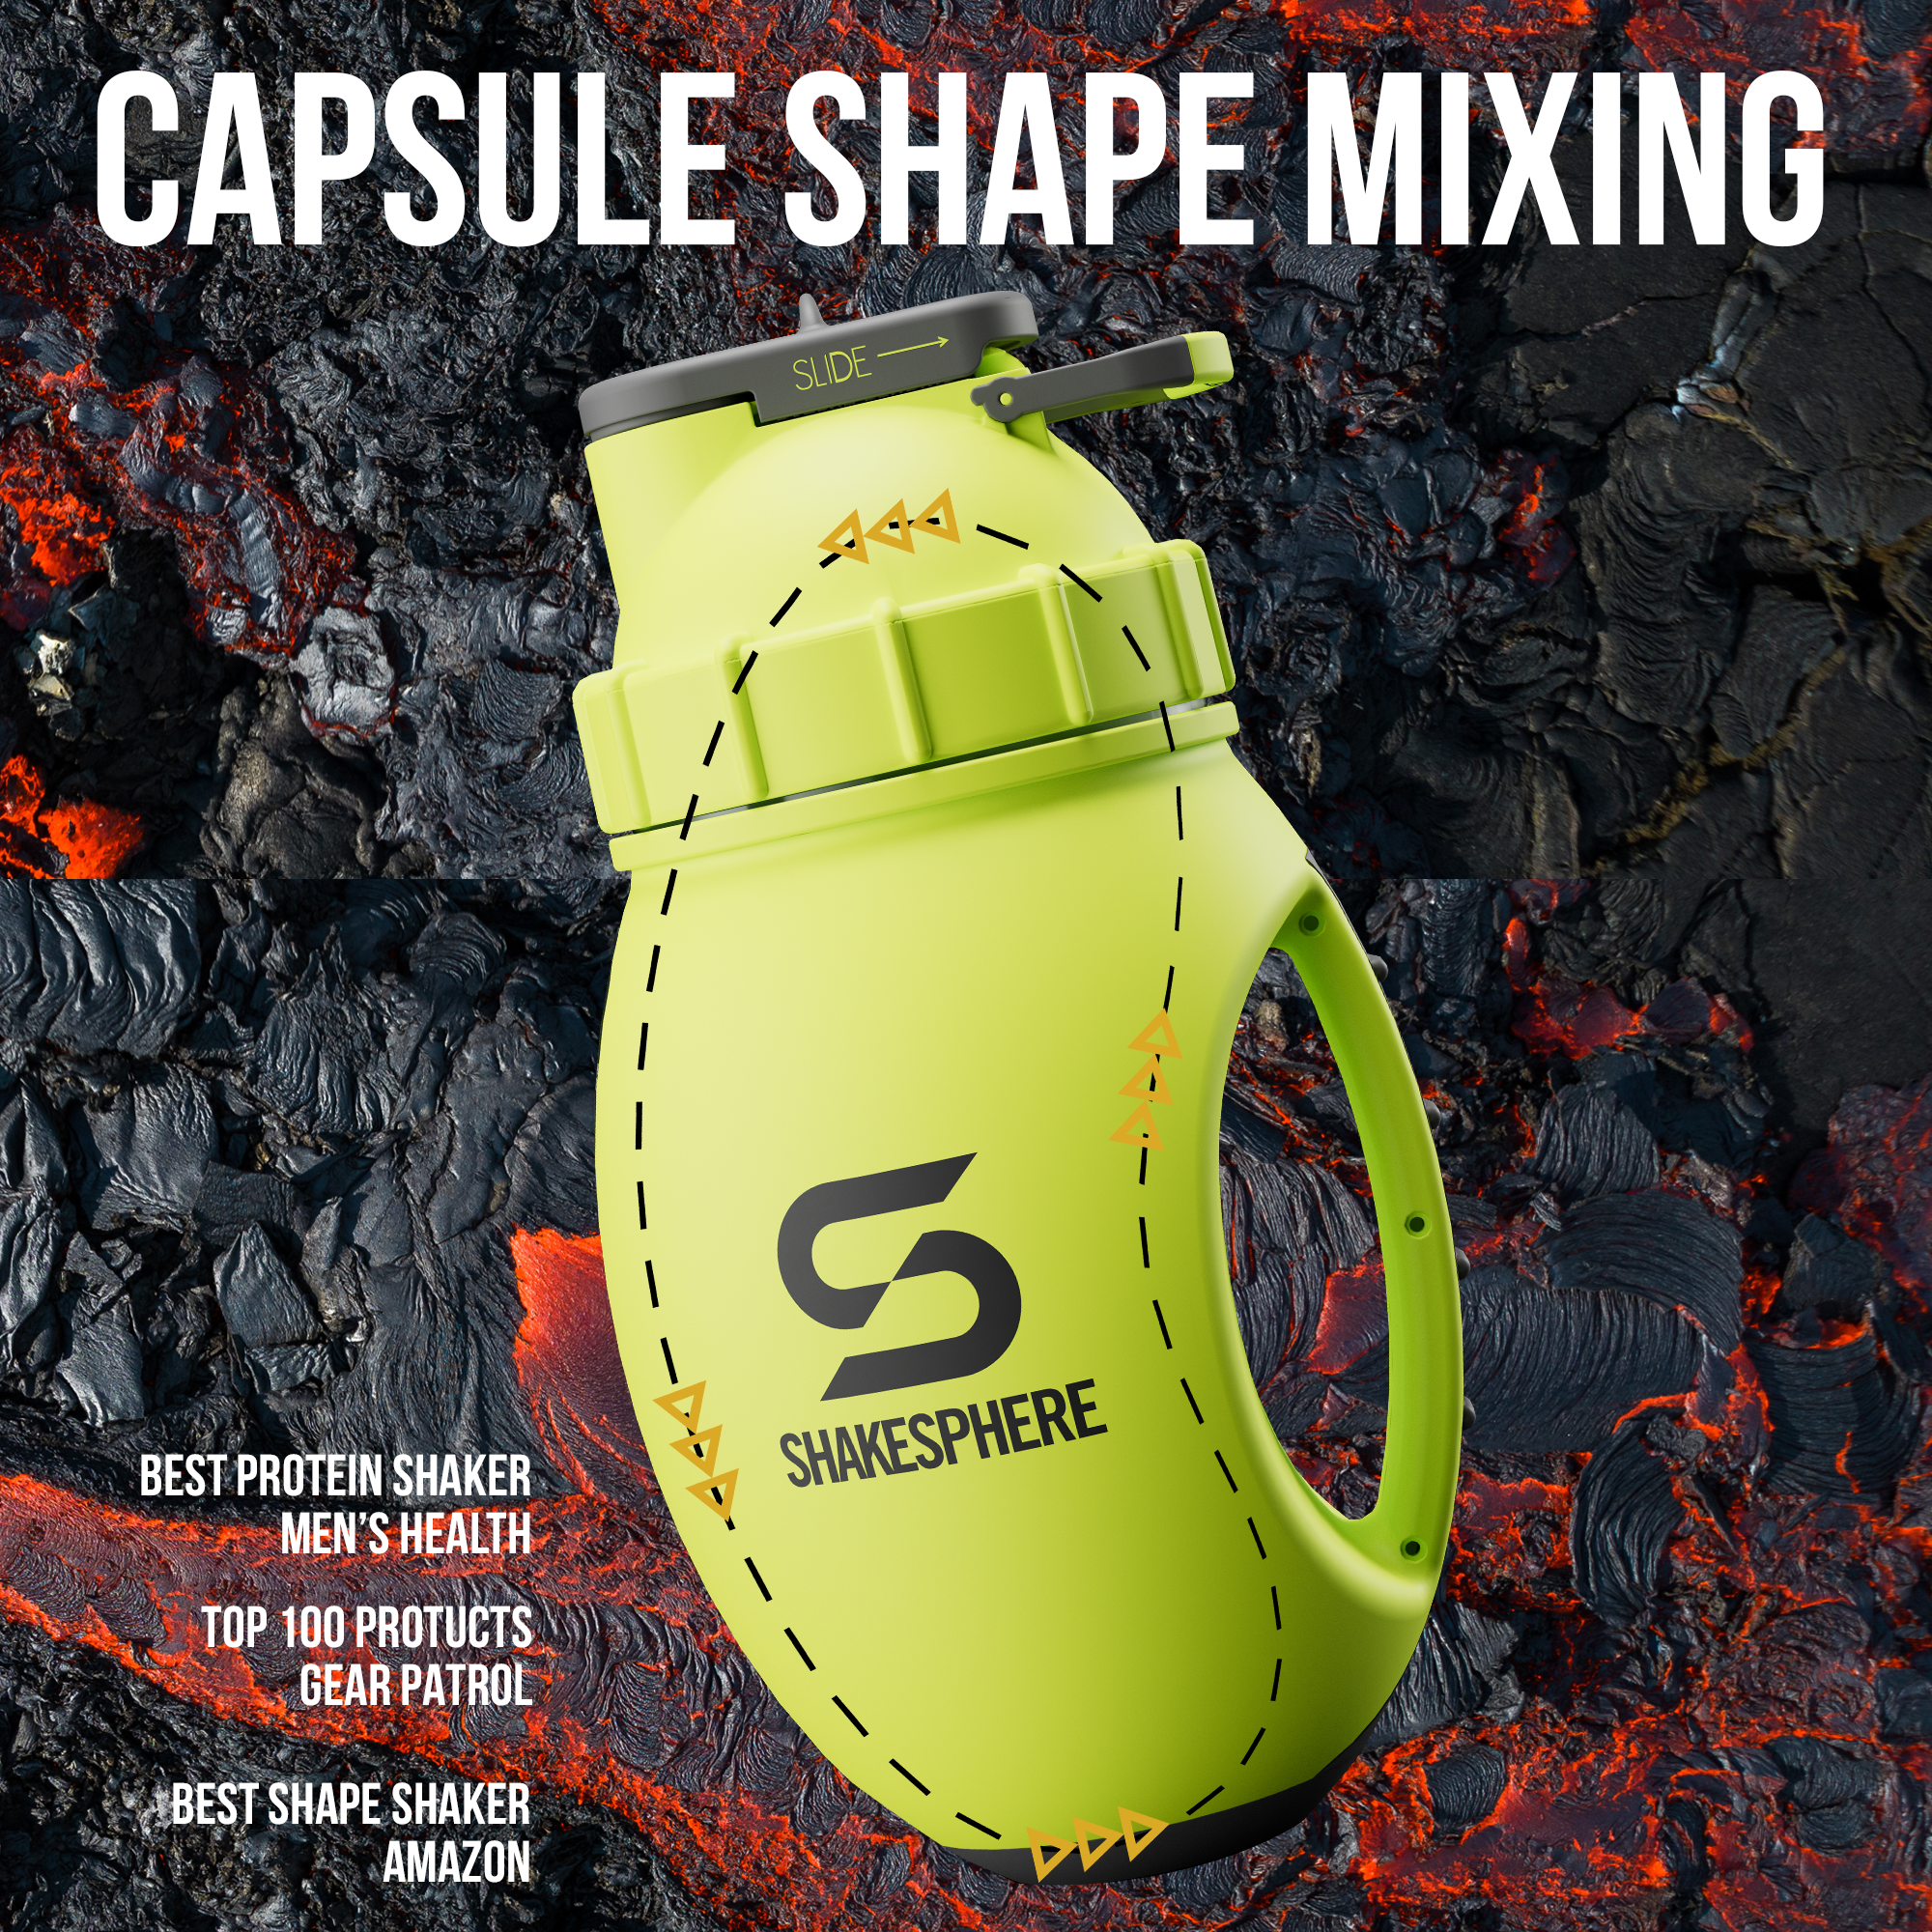 ShakeSphere Mixer Jug 1.3L / Fluorescent Yellow